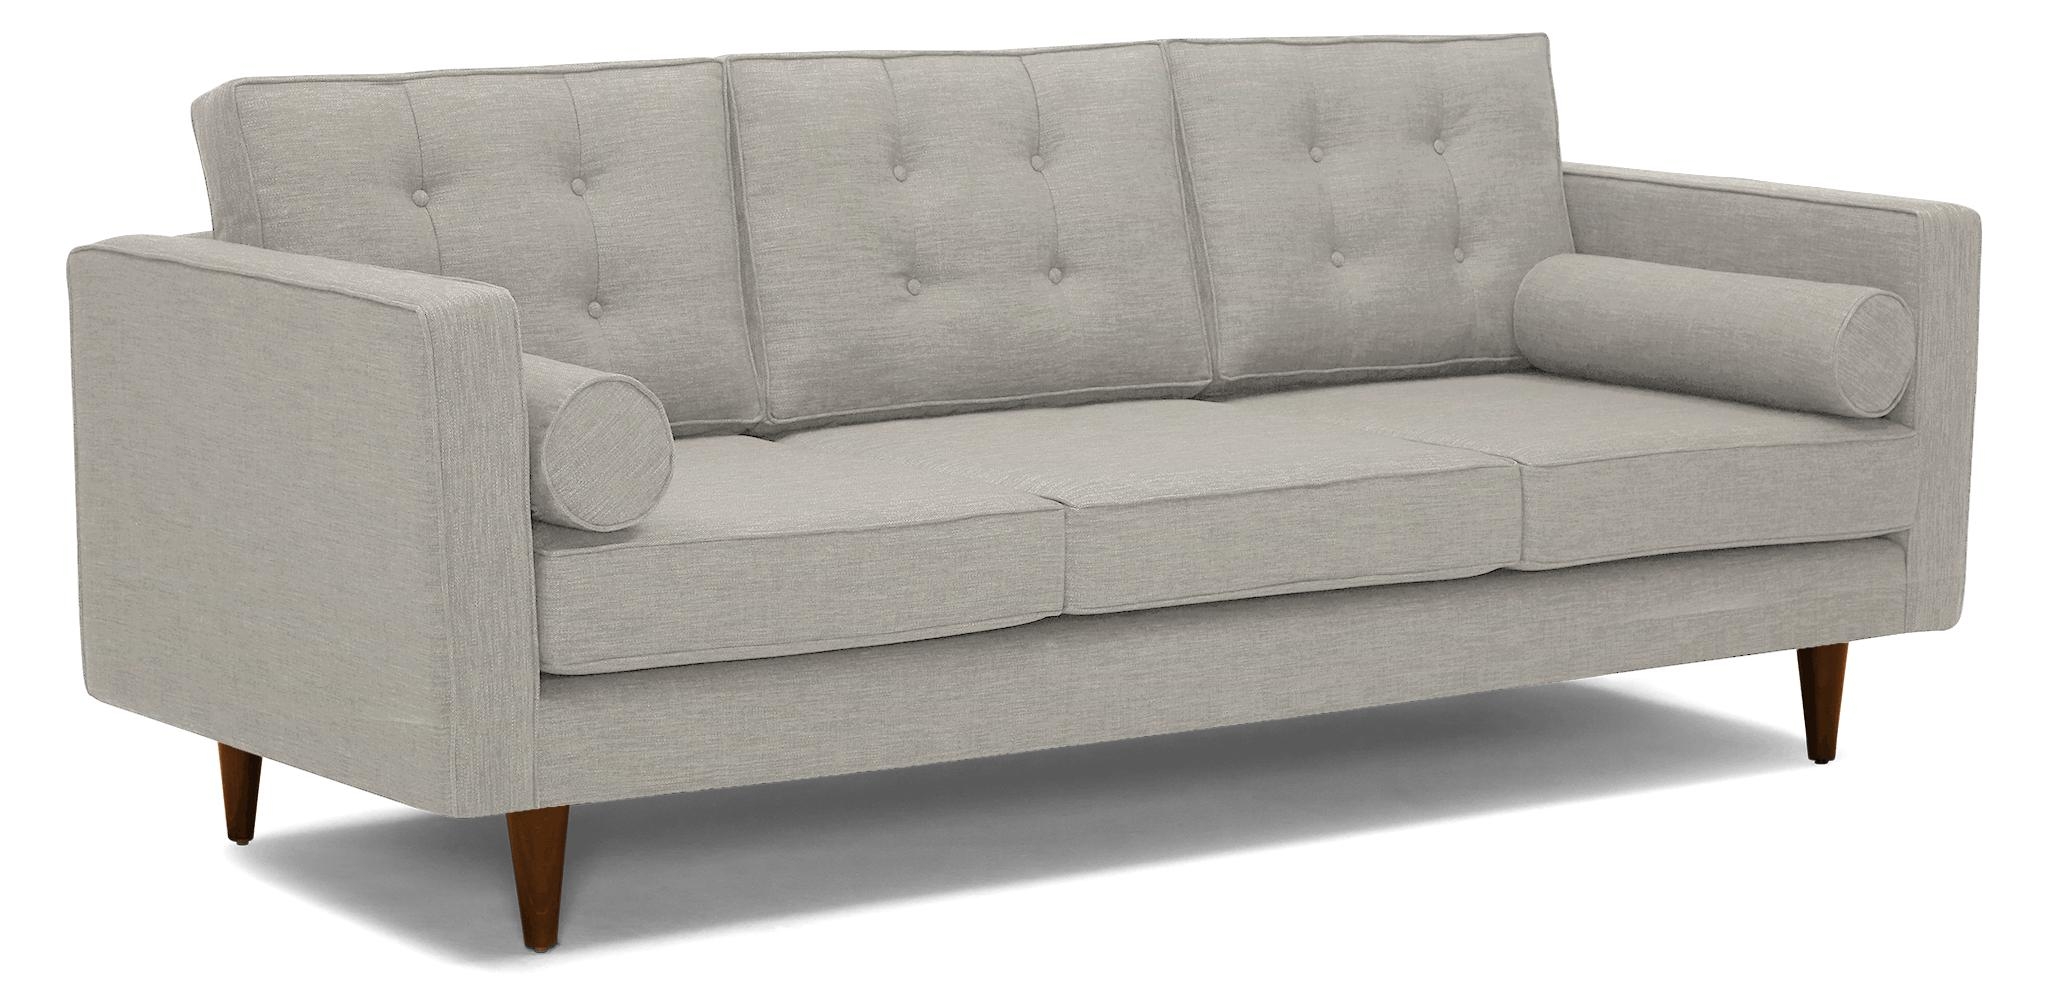 White Braxton Mid Century Modern Sofa - Bloke Cotton - Mocha - Image 1